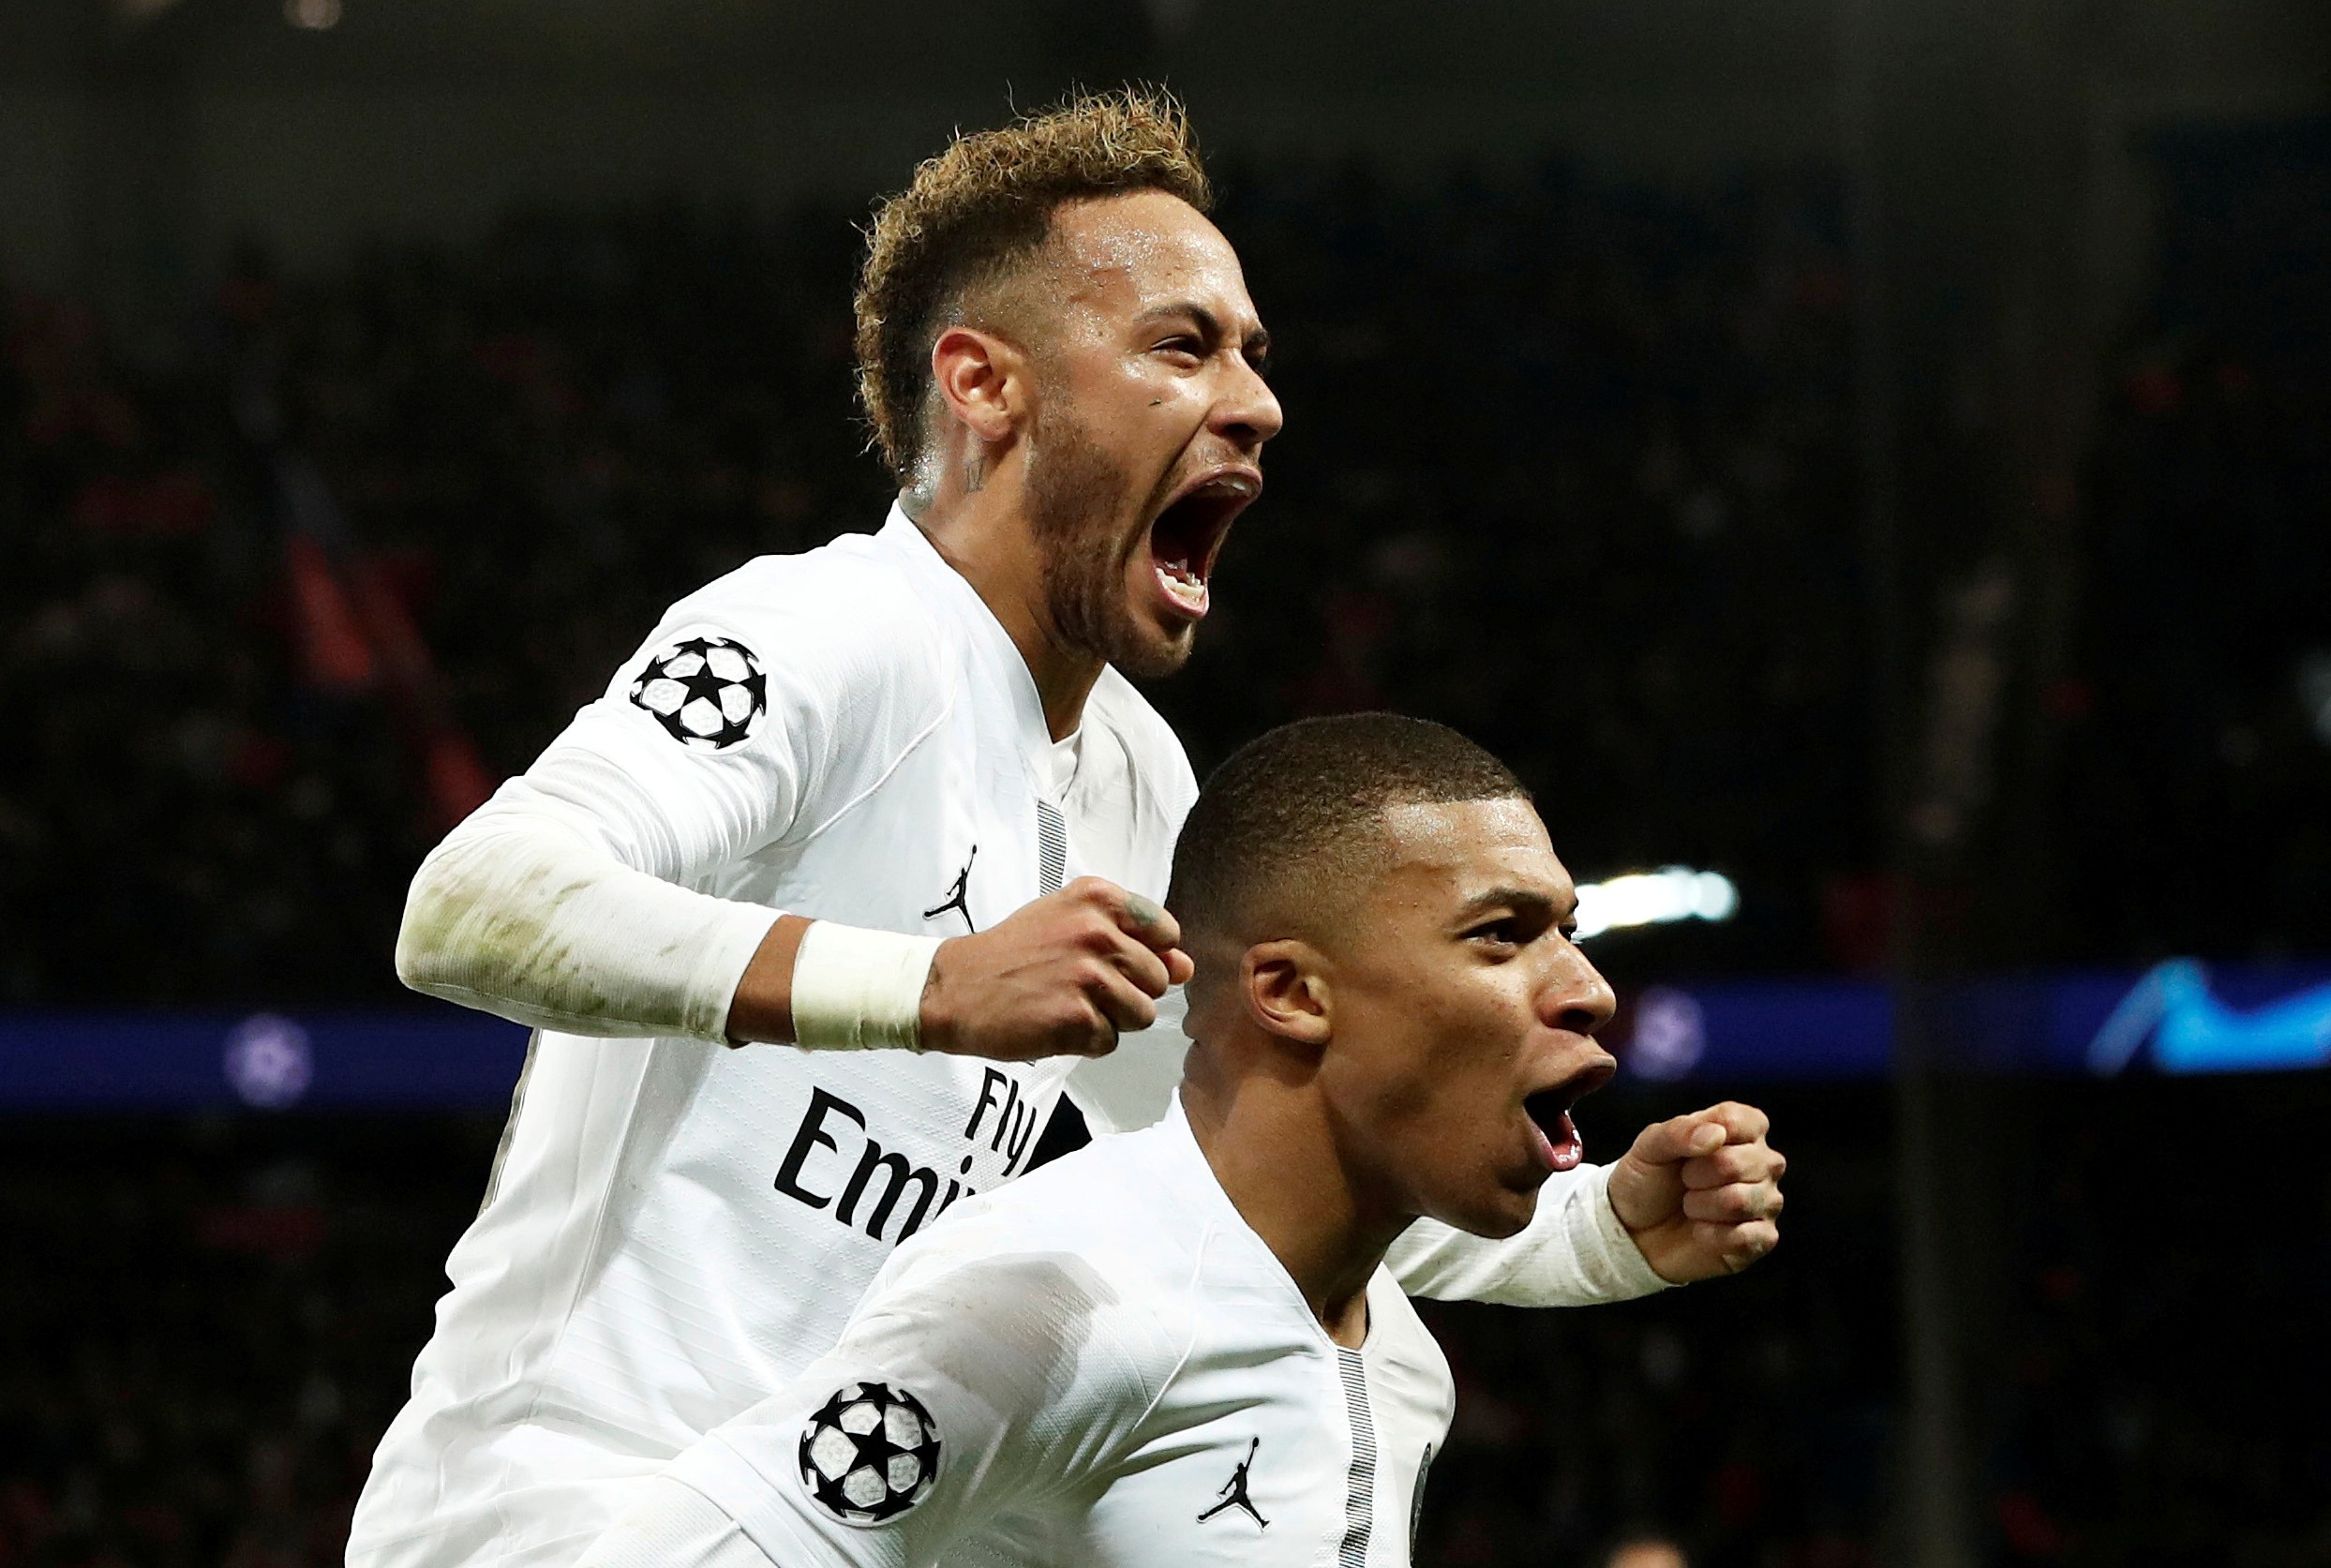 Paris St-Germain’s Neymar celebrates scoring in the Uefa Champions League with teammate Kylian Mbappe in 2018. Photo: Reuters